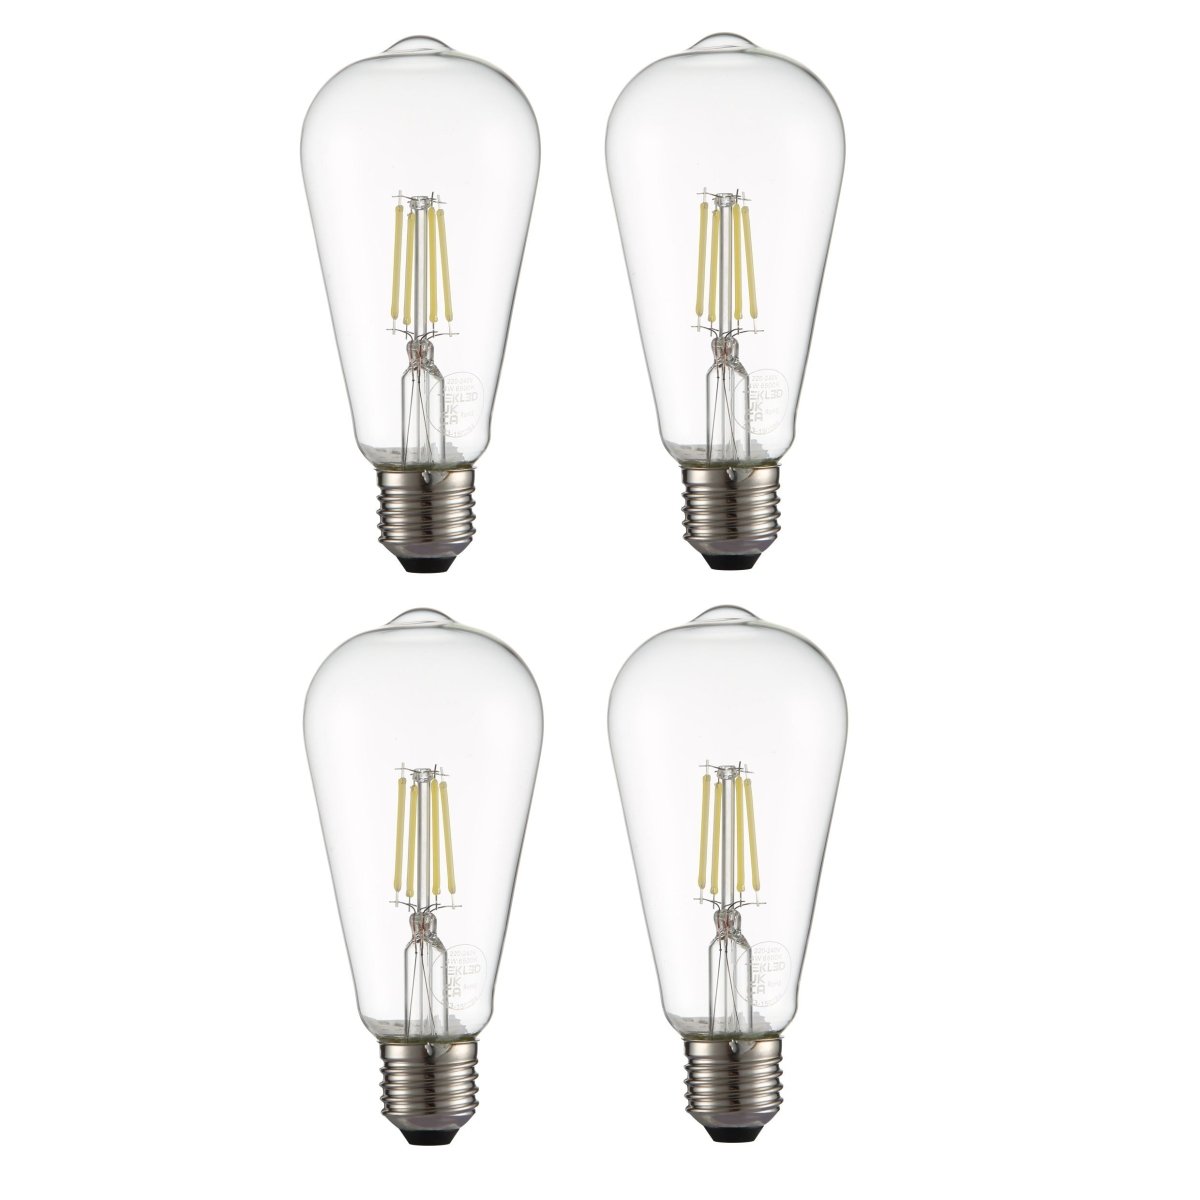 Main image of LED Filament Bulb ST64 Edison E27 Edison Screw 4W 470lm Cool Daylight 6500K Clear Pack of 4 | TEKLED 583-150284